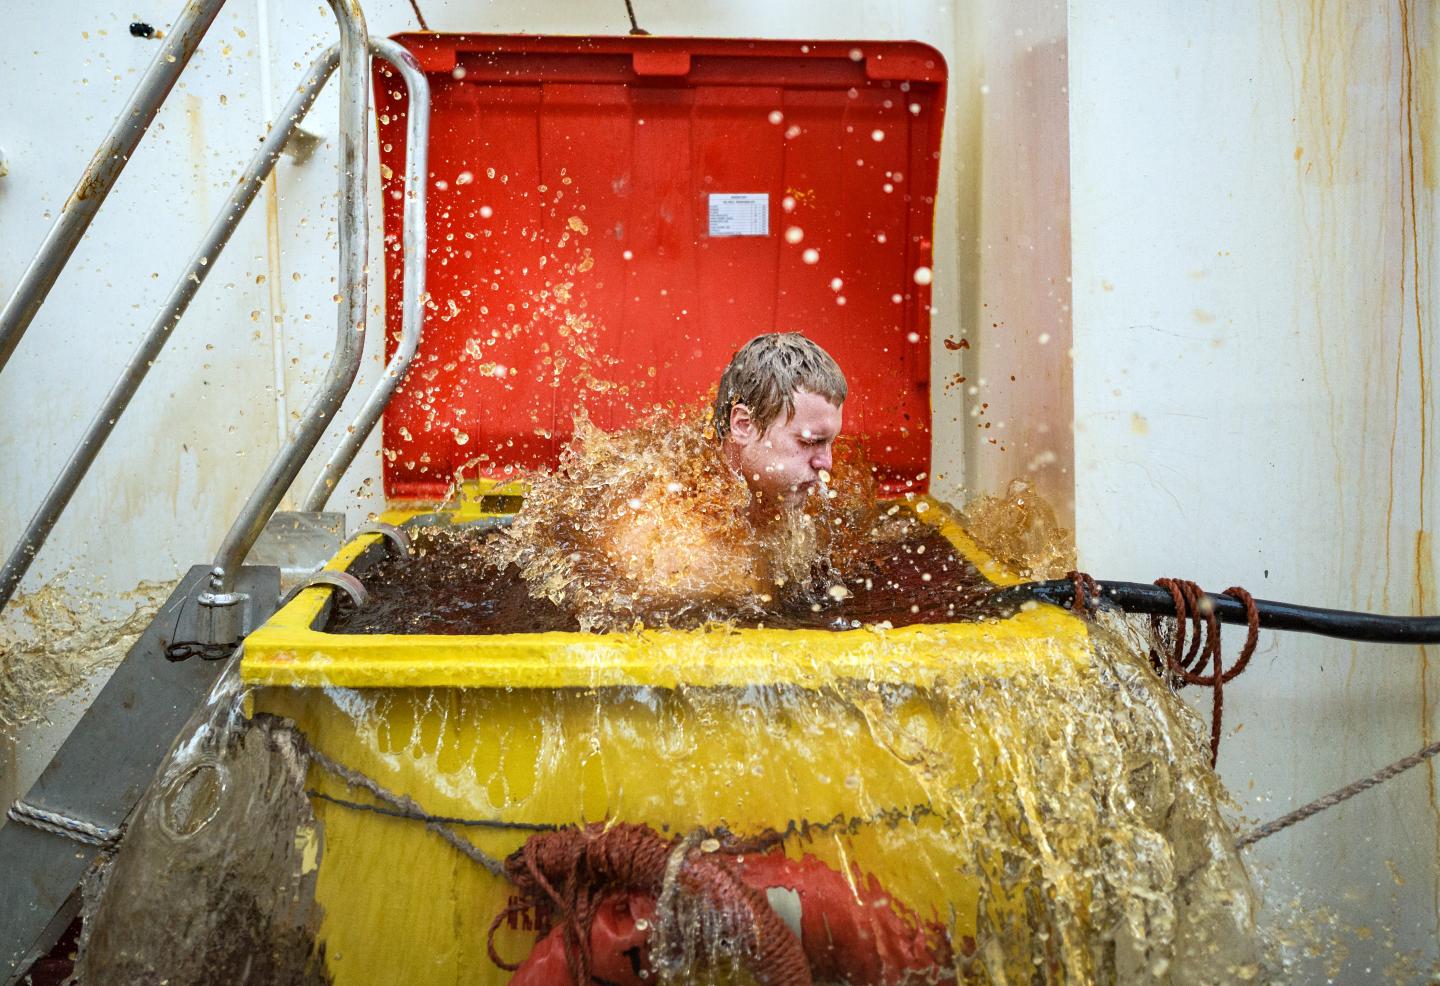 Man submerged in a large bin